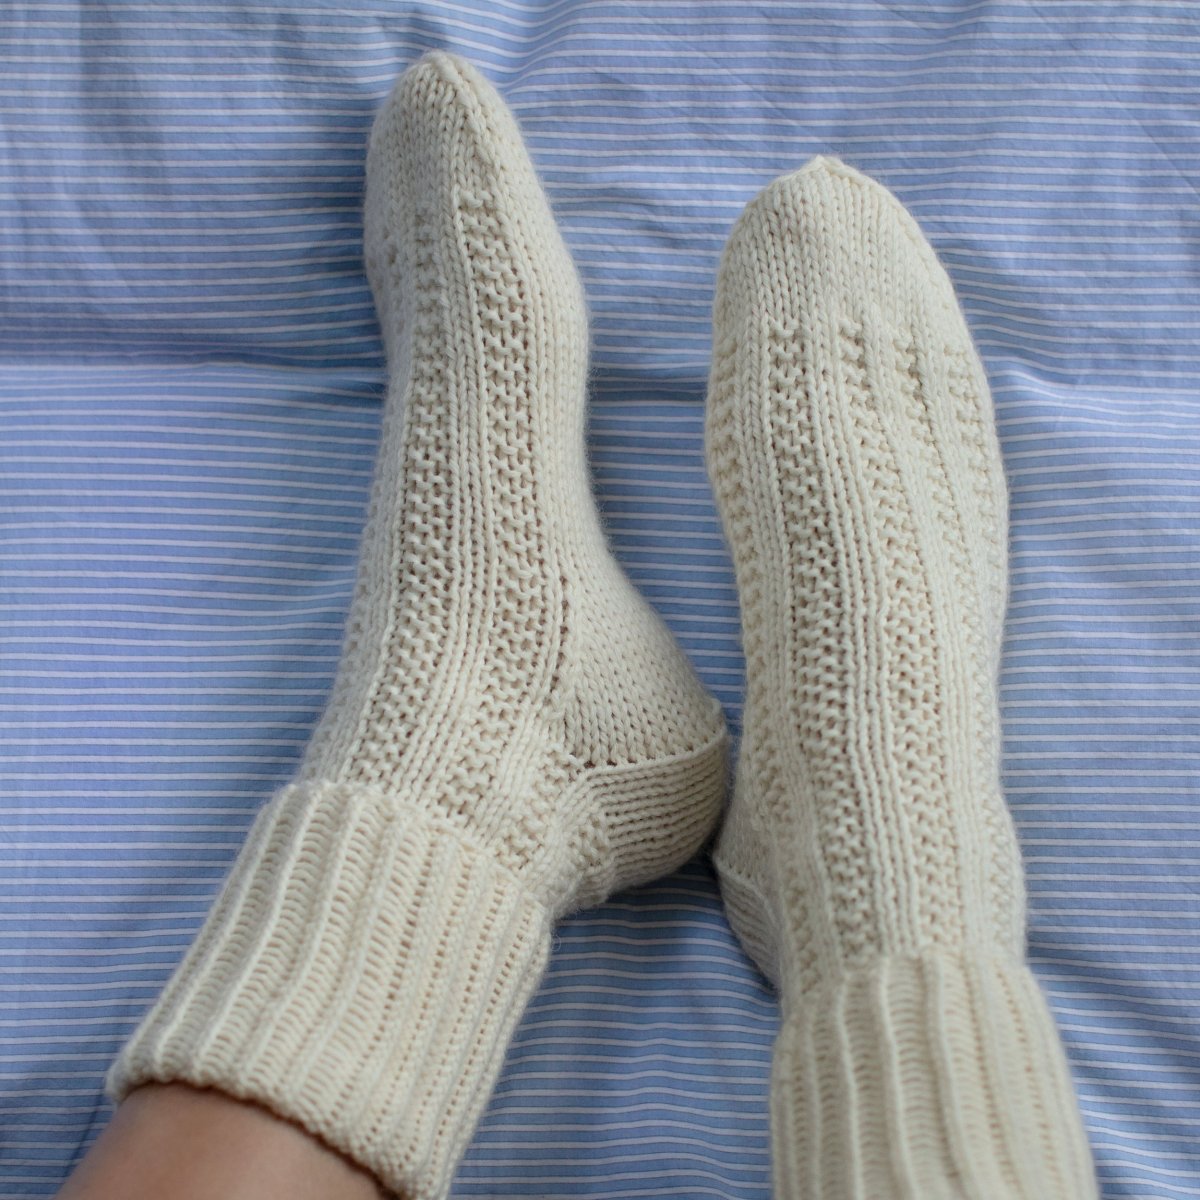 SOLA SOCKS - English knitting pattern by Anne Ventzel